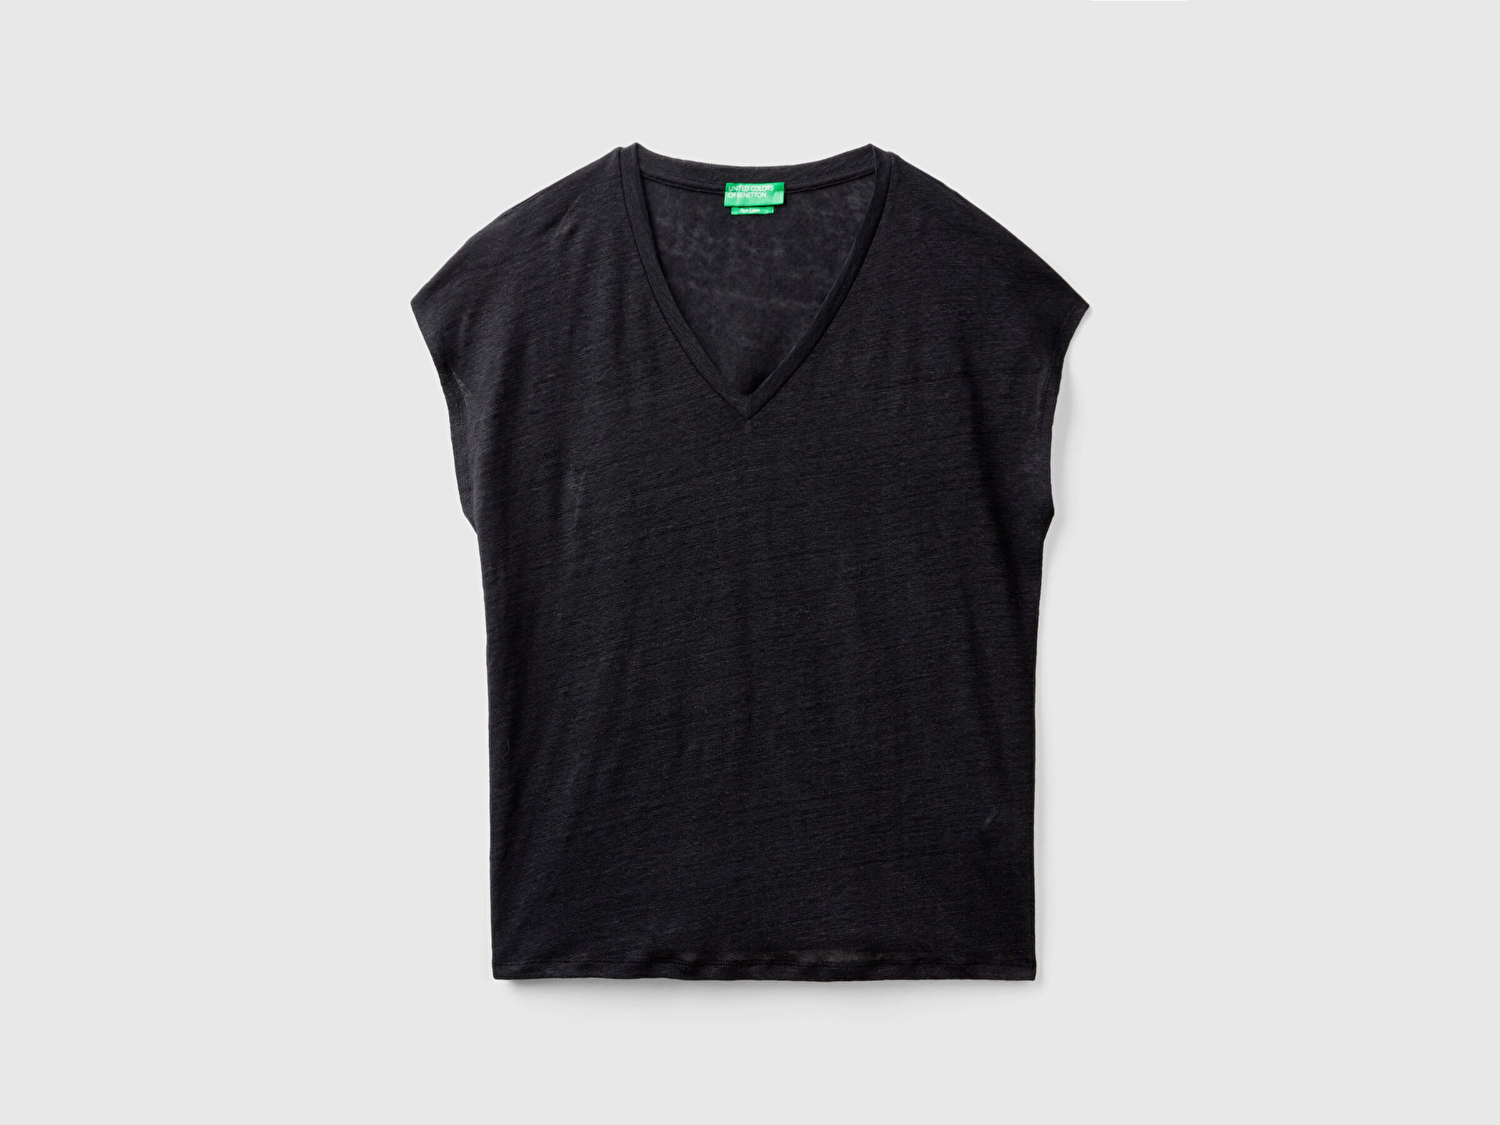 Benetton Kadın Siyah %100 Keten Rahat Kalıp Derin V Yaka Kolsuz T-Shirt